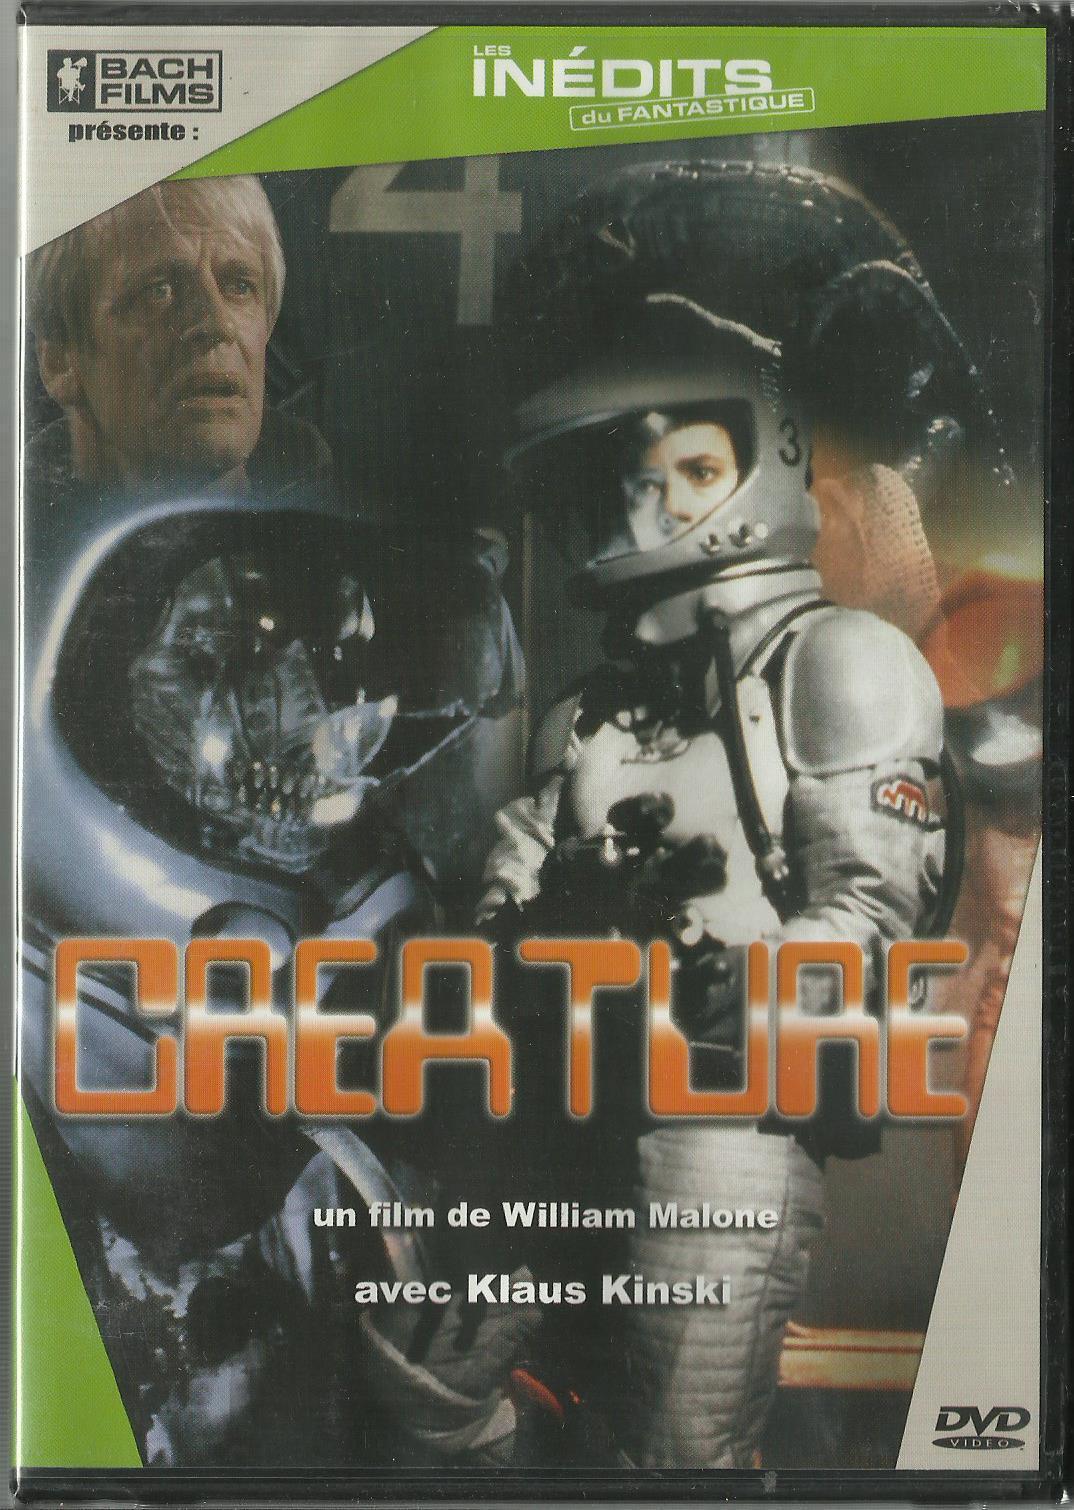 Image du DVD du film Créature de William Malone